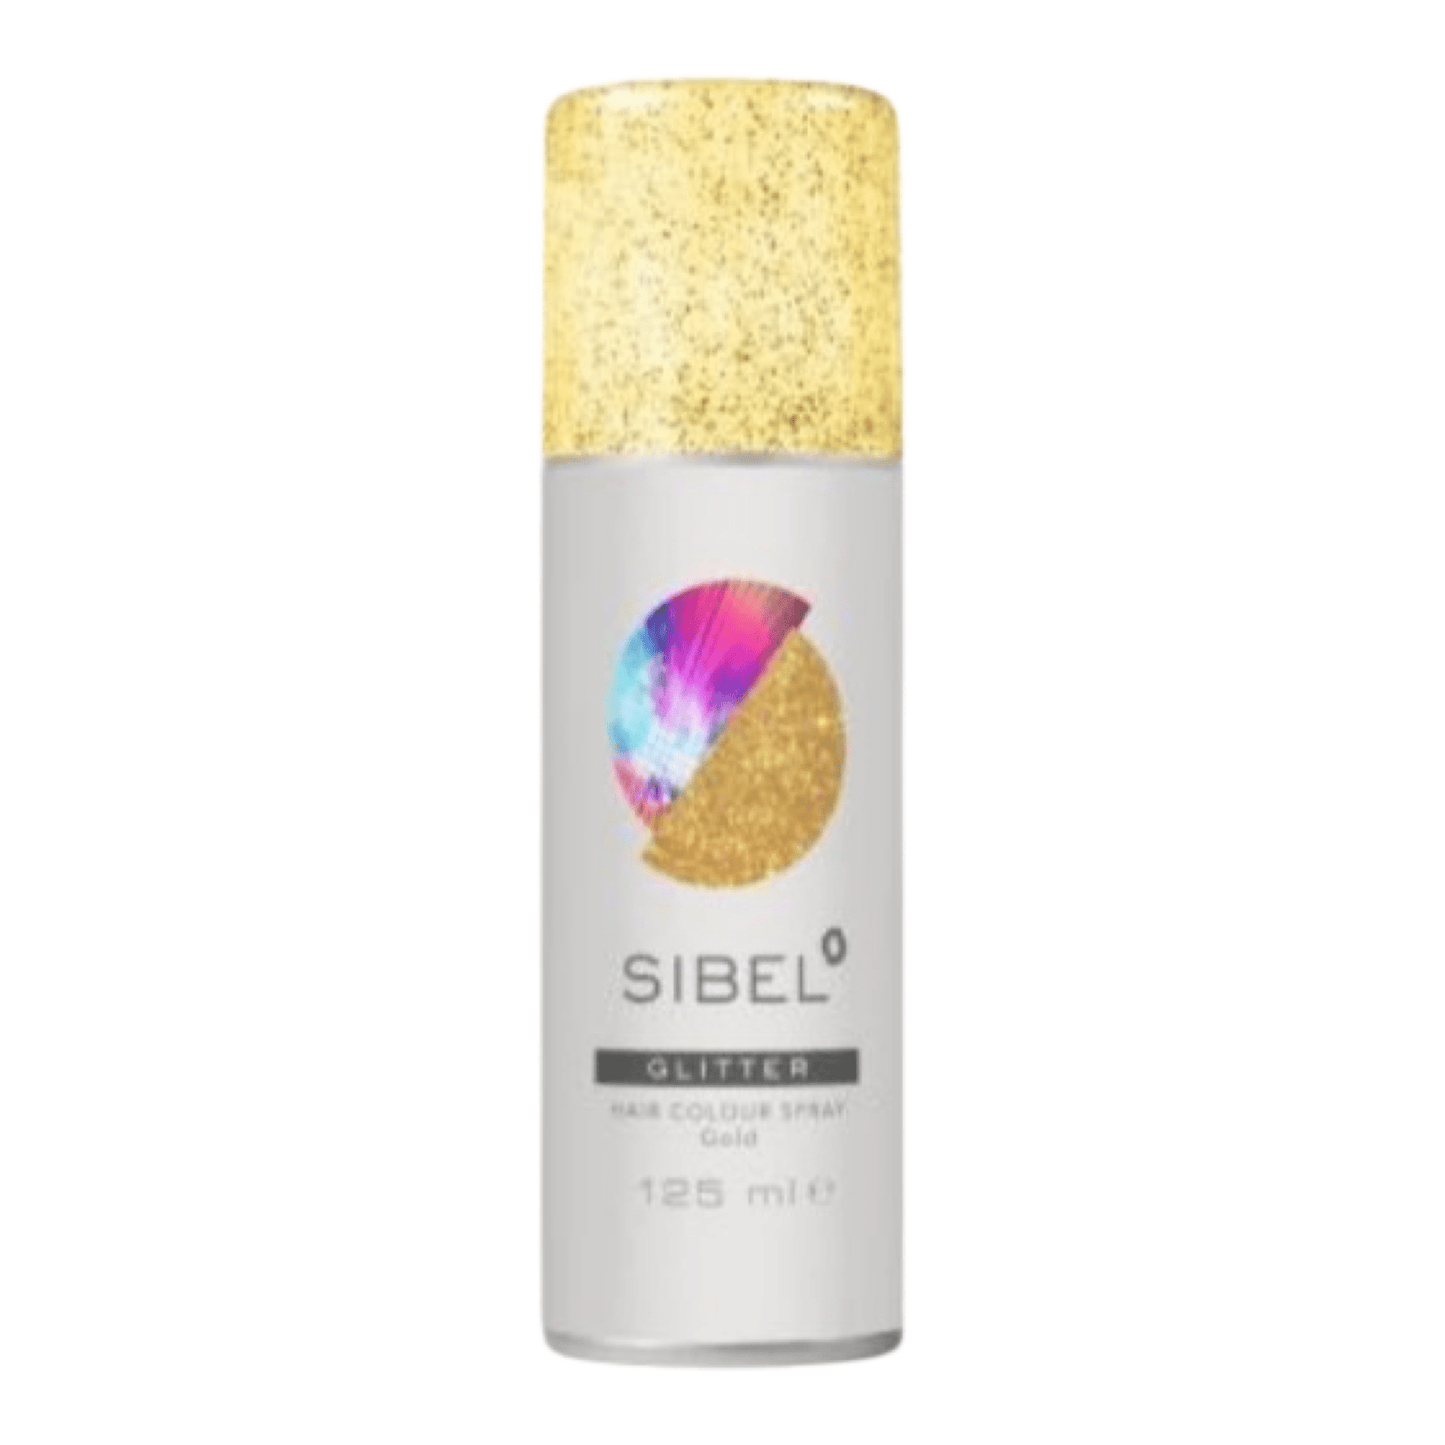 Sibel - color spray guld glimmer 125 ml - Merle og Wilde